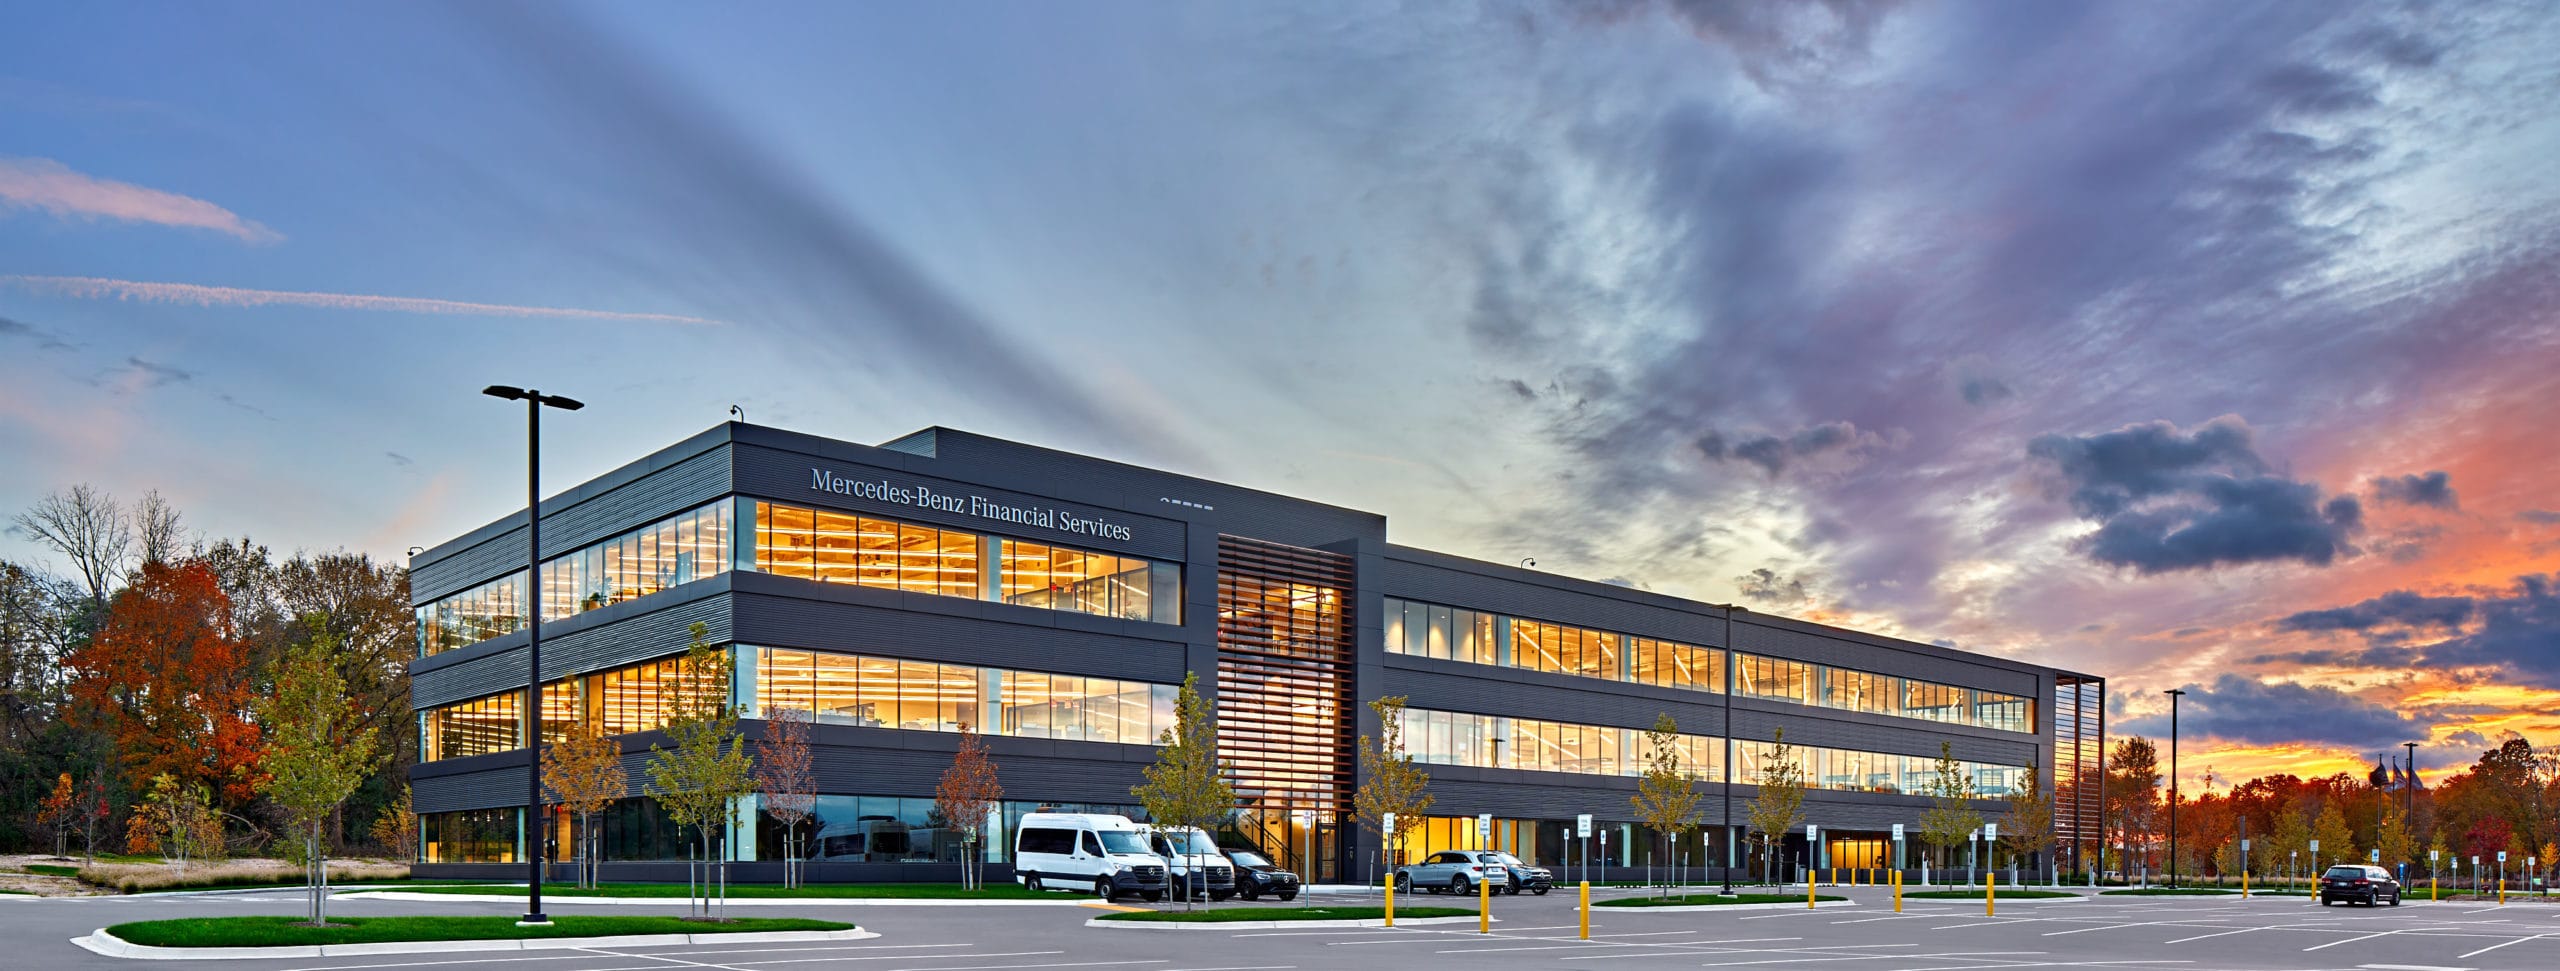 Mercedes-Benz Financial Services Unveils New Corporate Campus in Farmington Hills, Mich.